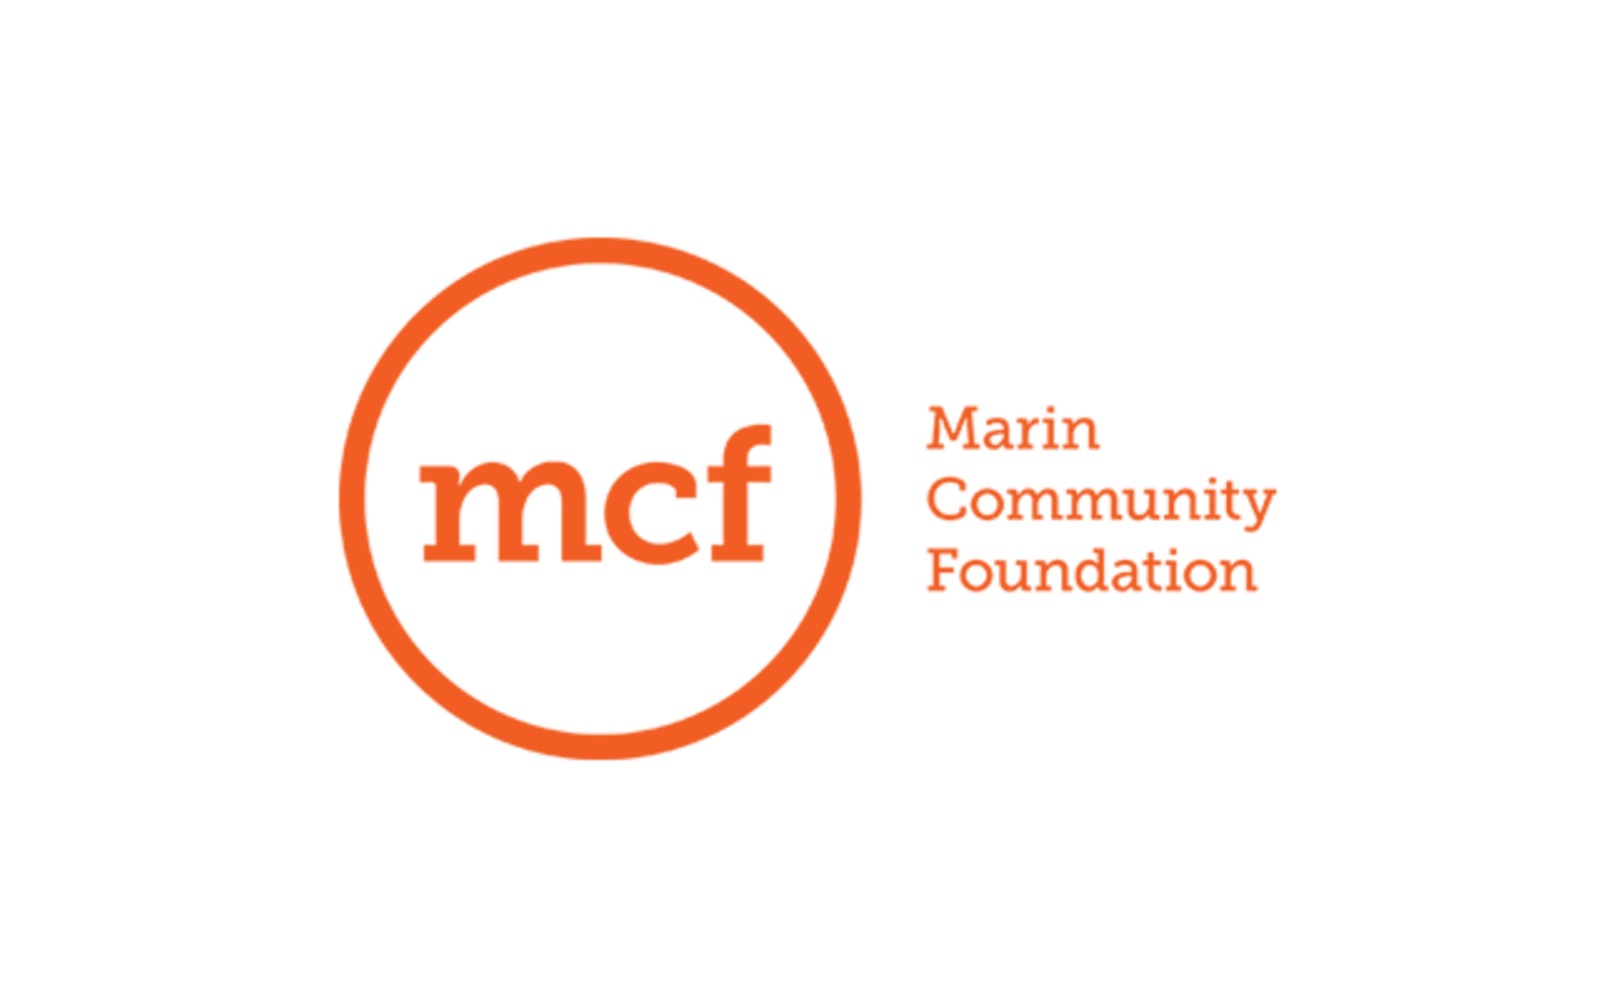 Marin Community Foundation Logo